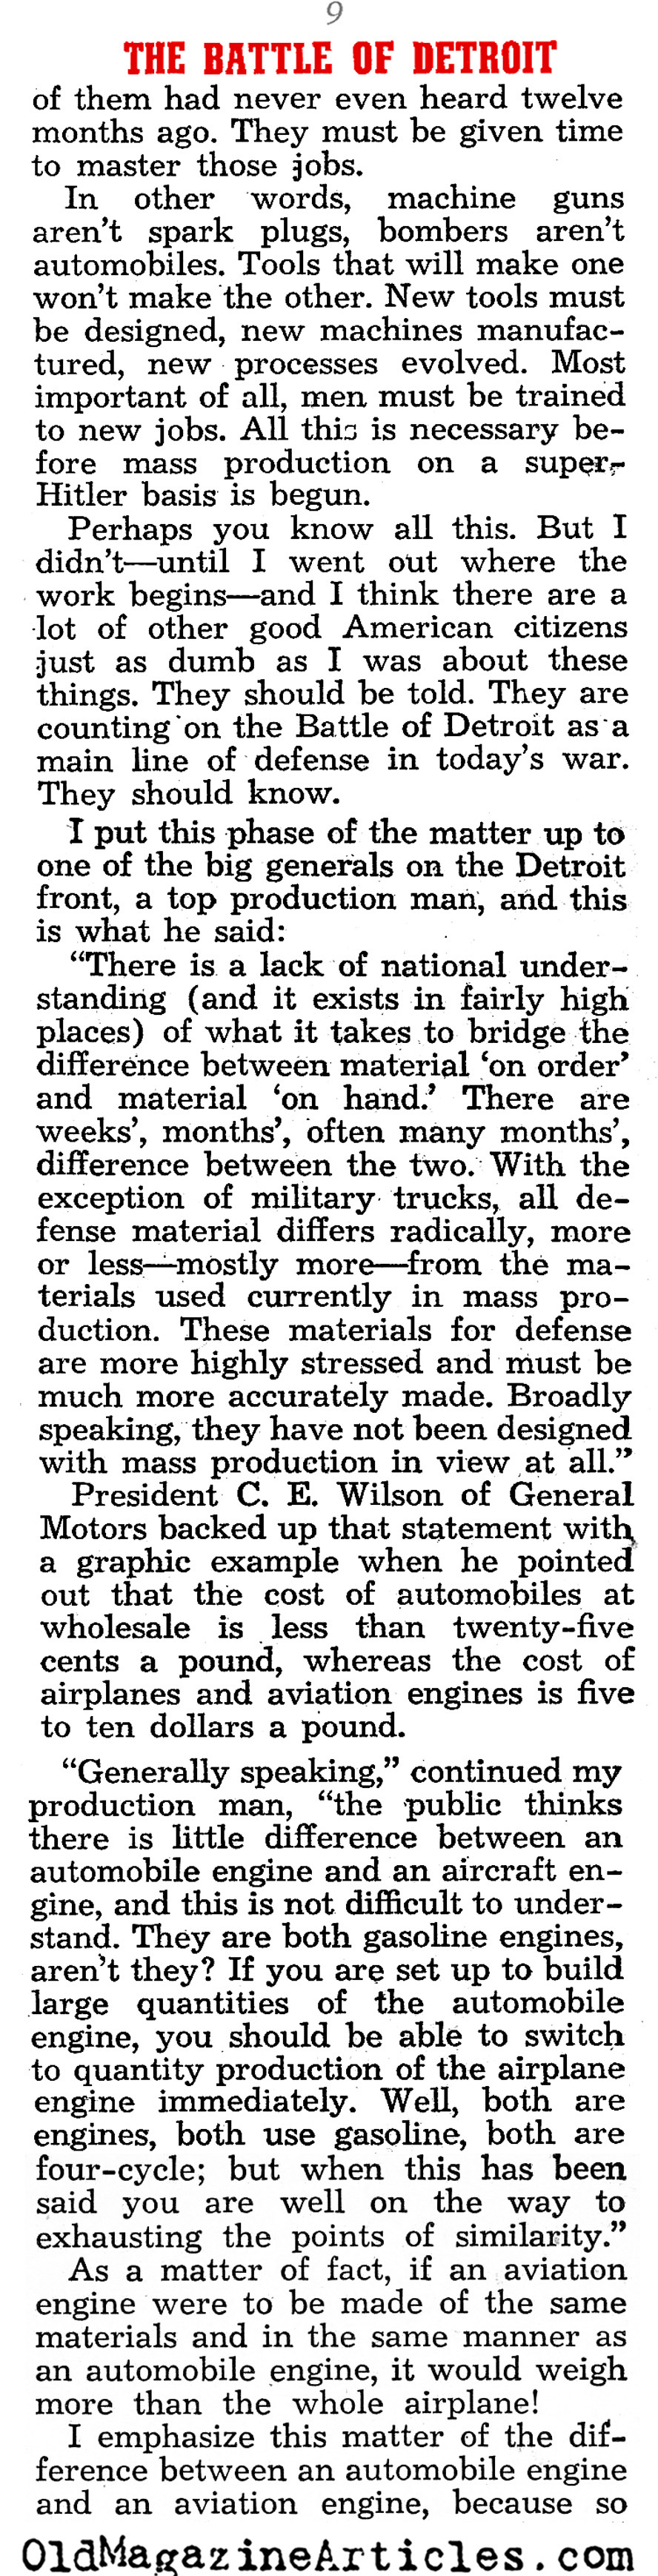 The Importance of Detroit (Liberty Magazine, 1942)